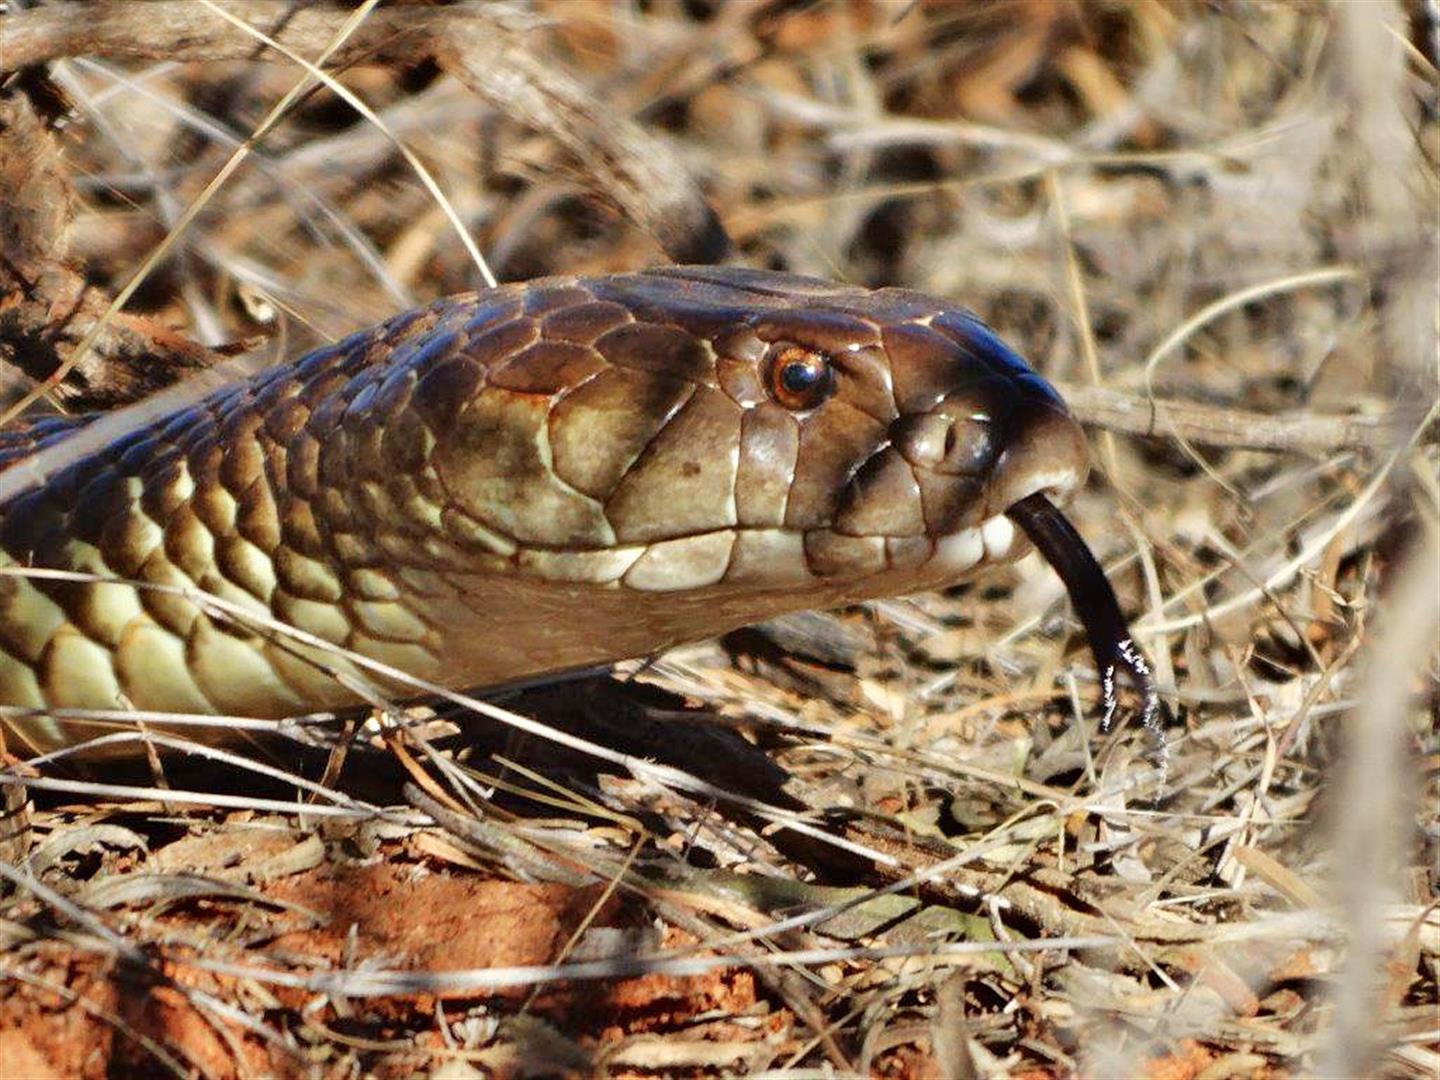 Mulga Snake (Pseudechis australis). All photos by Lindsay Muller.